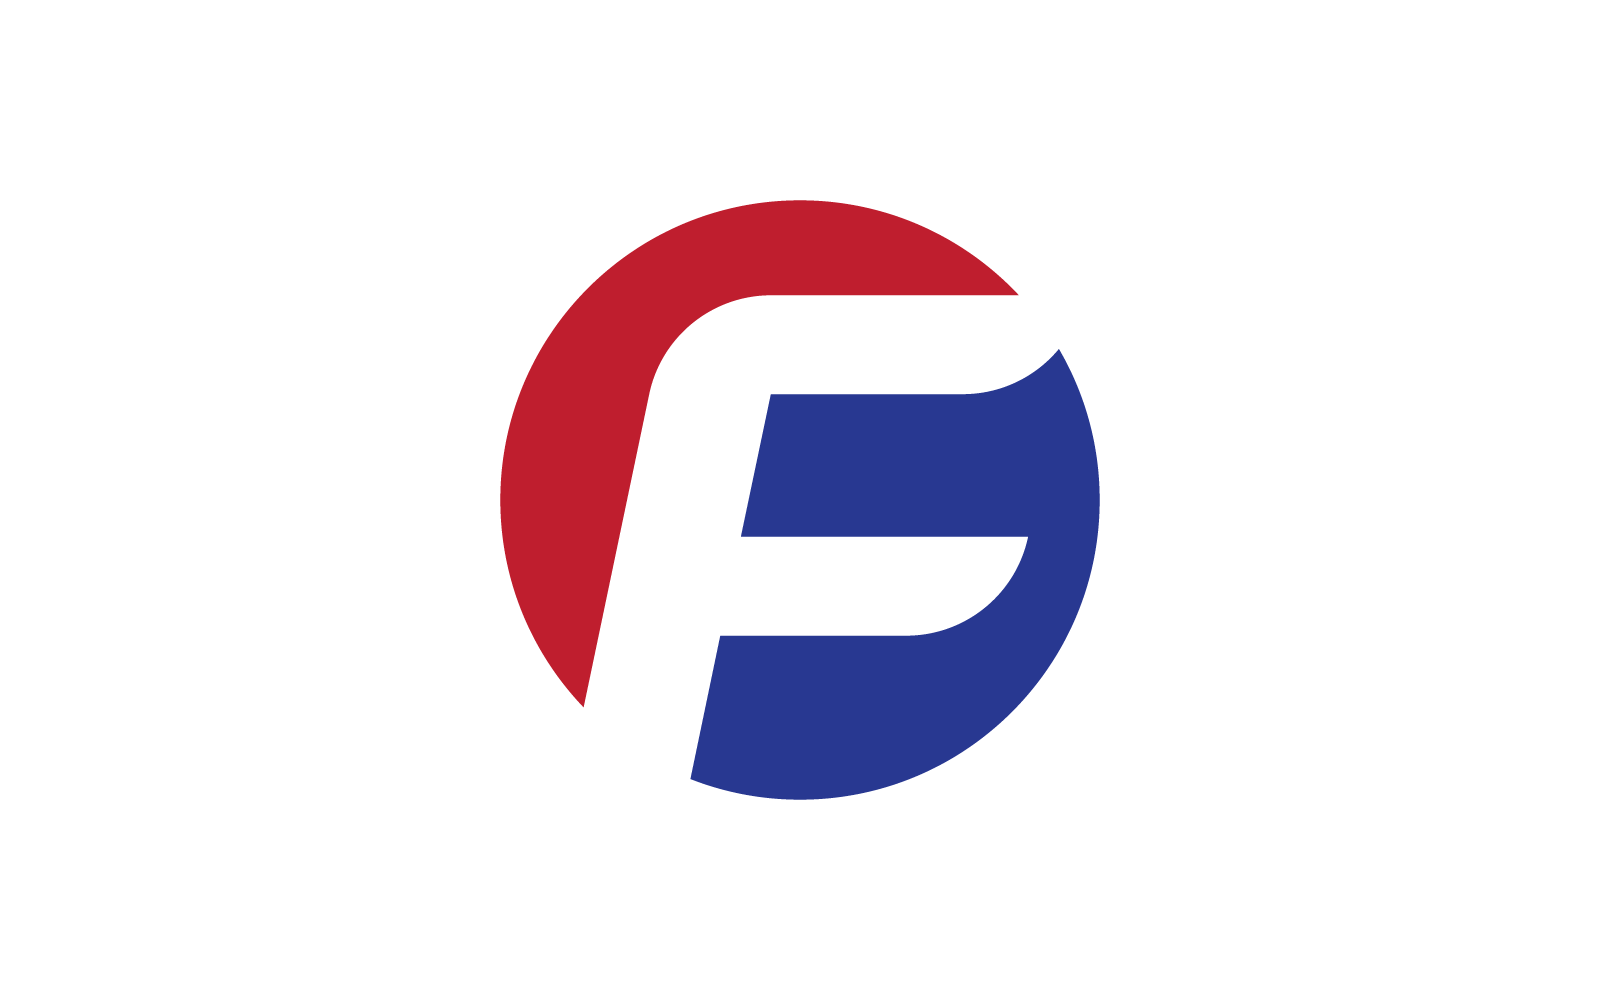 F initial letter logo vector flat design